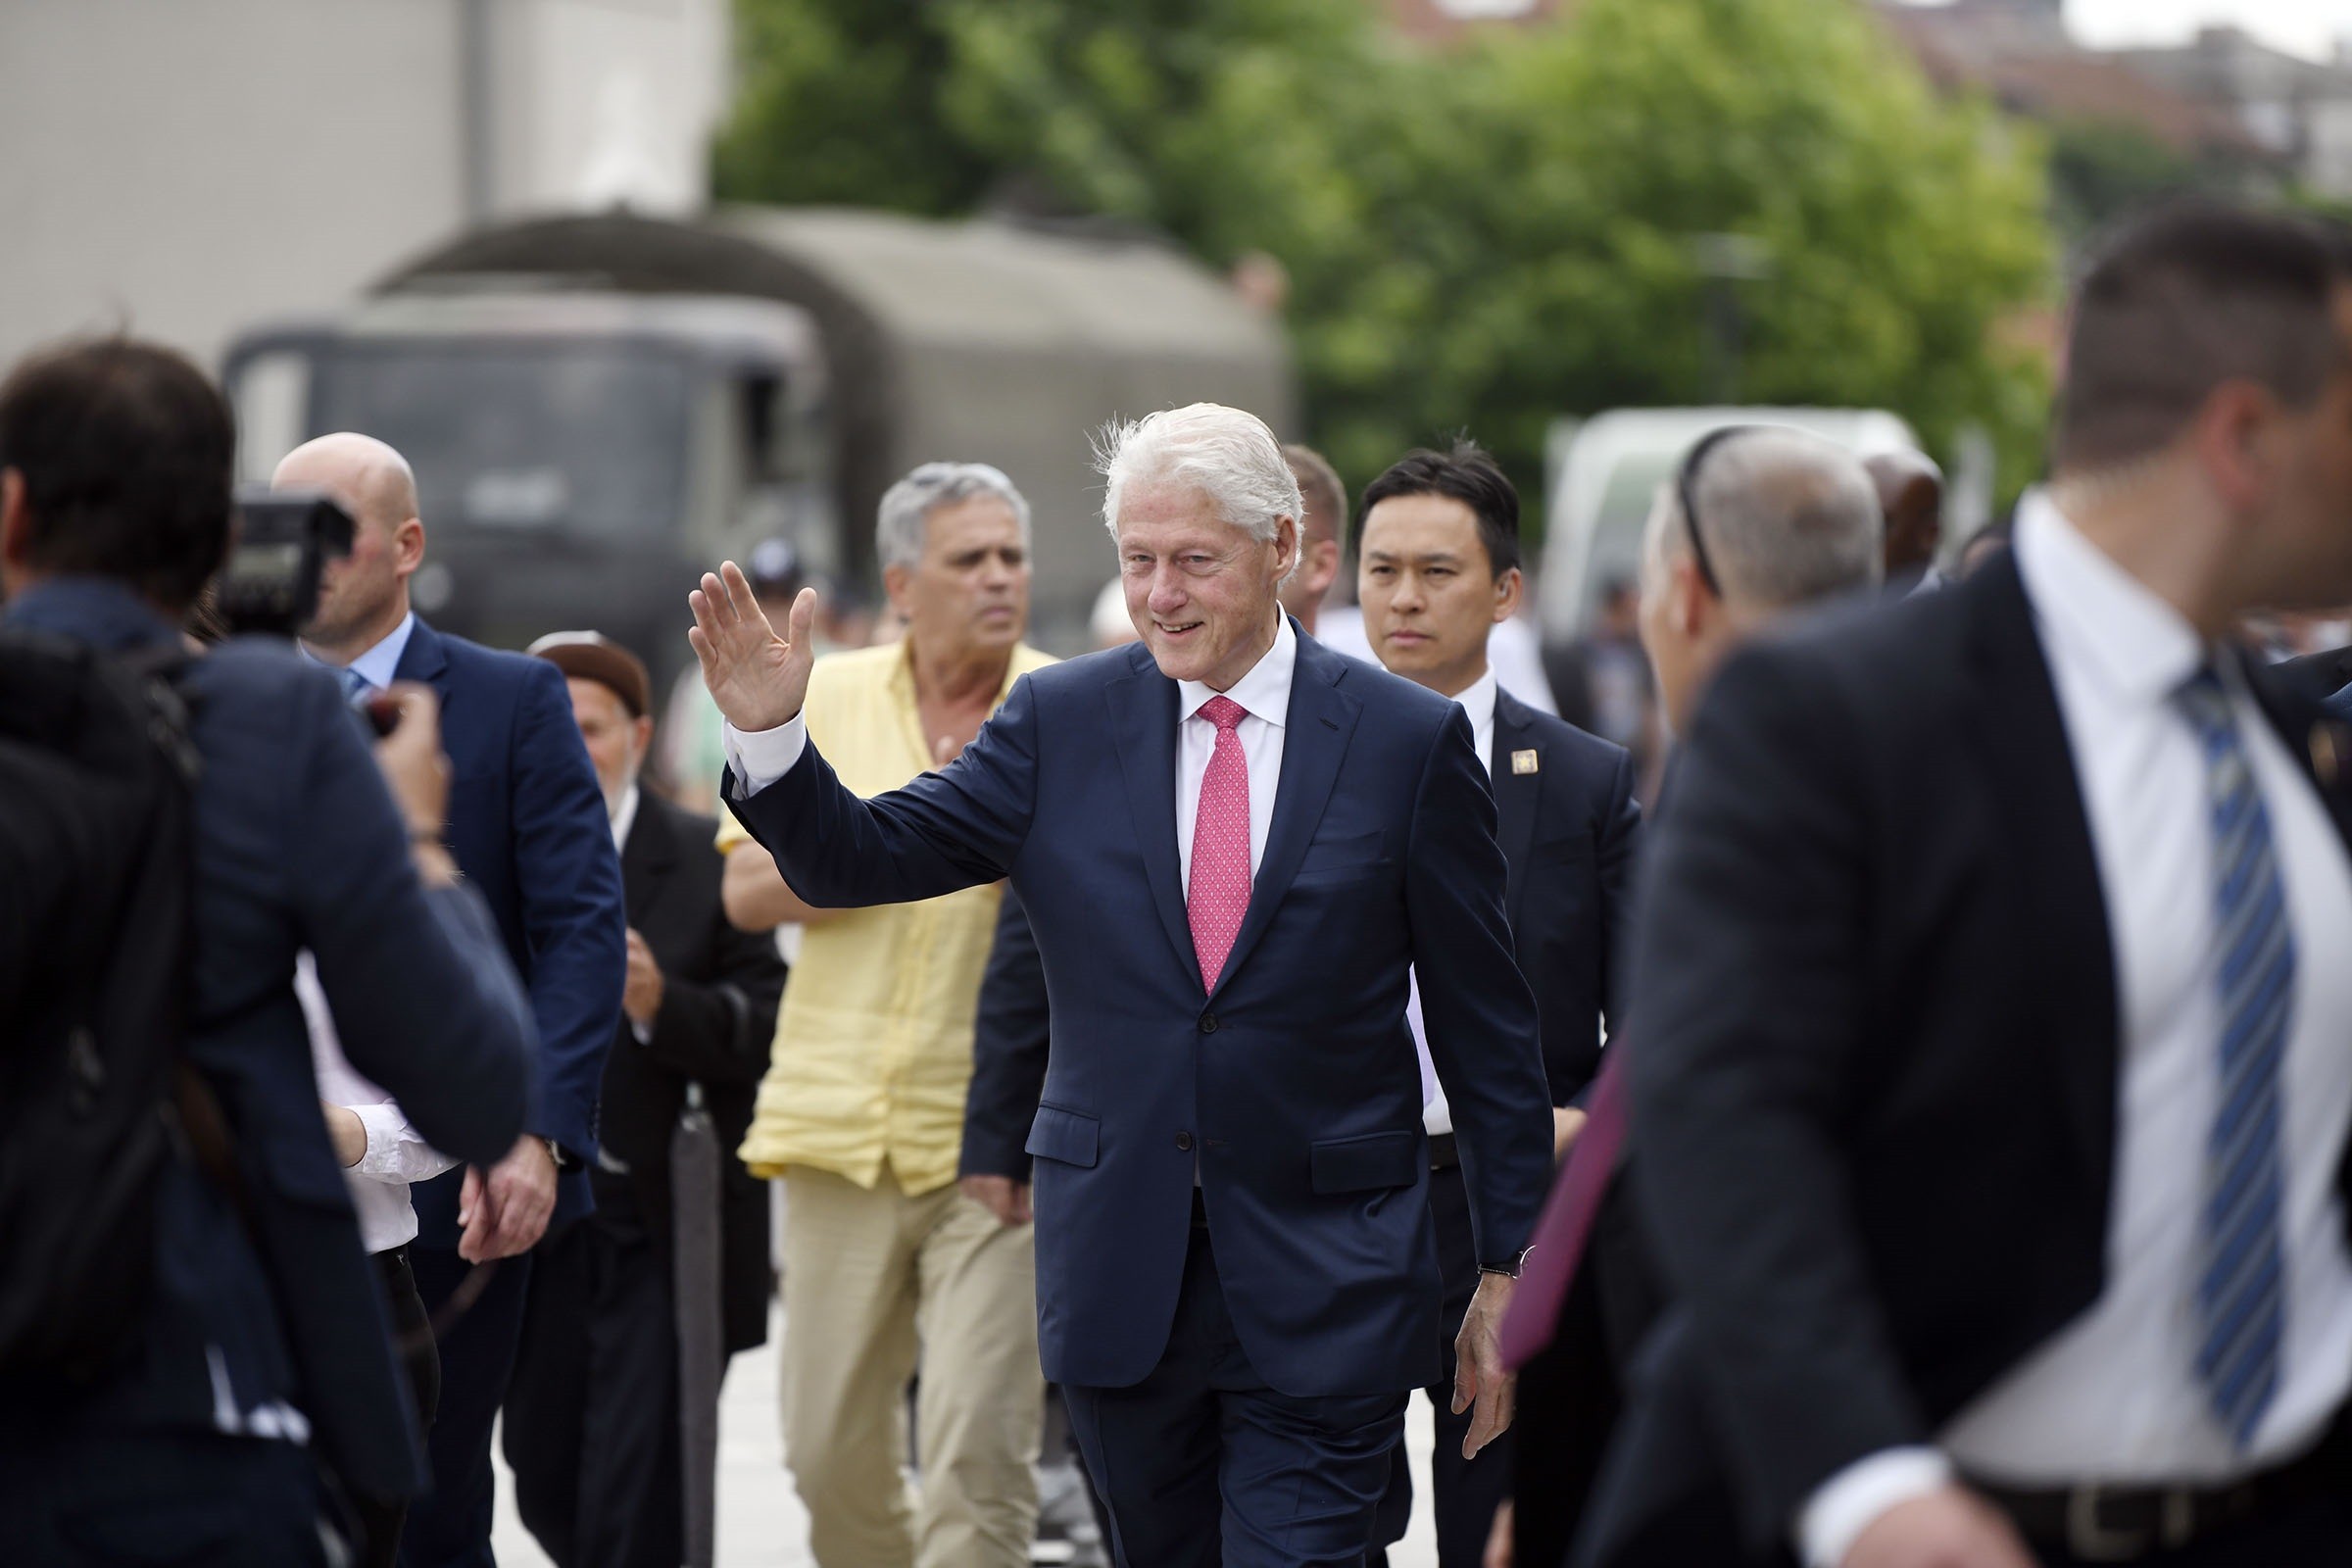 Presidenti Thaçi dekoroi Presidentin Clinton me “Urdhrin e Lirisë”